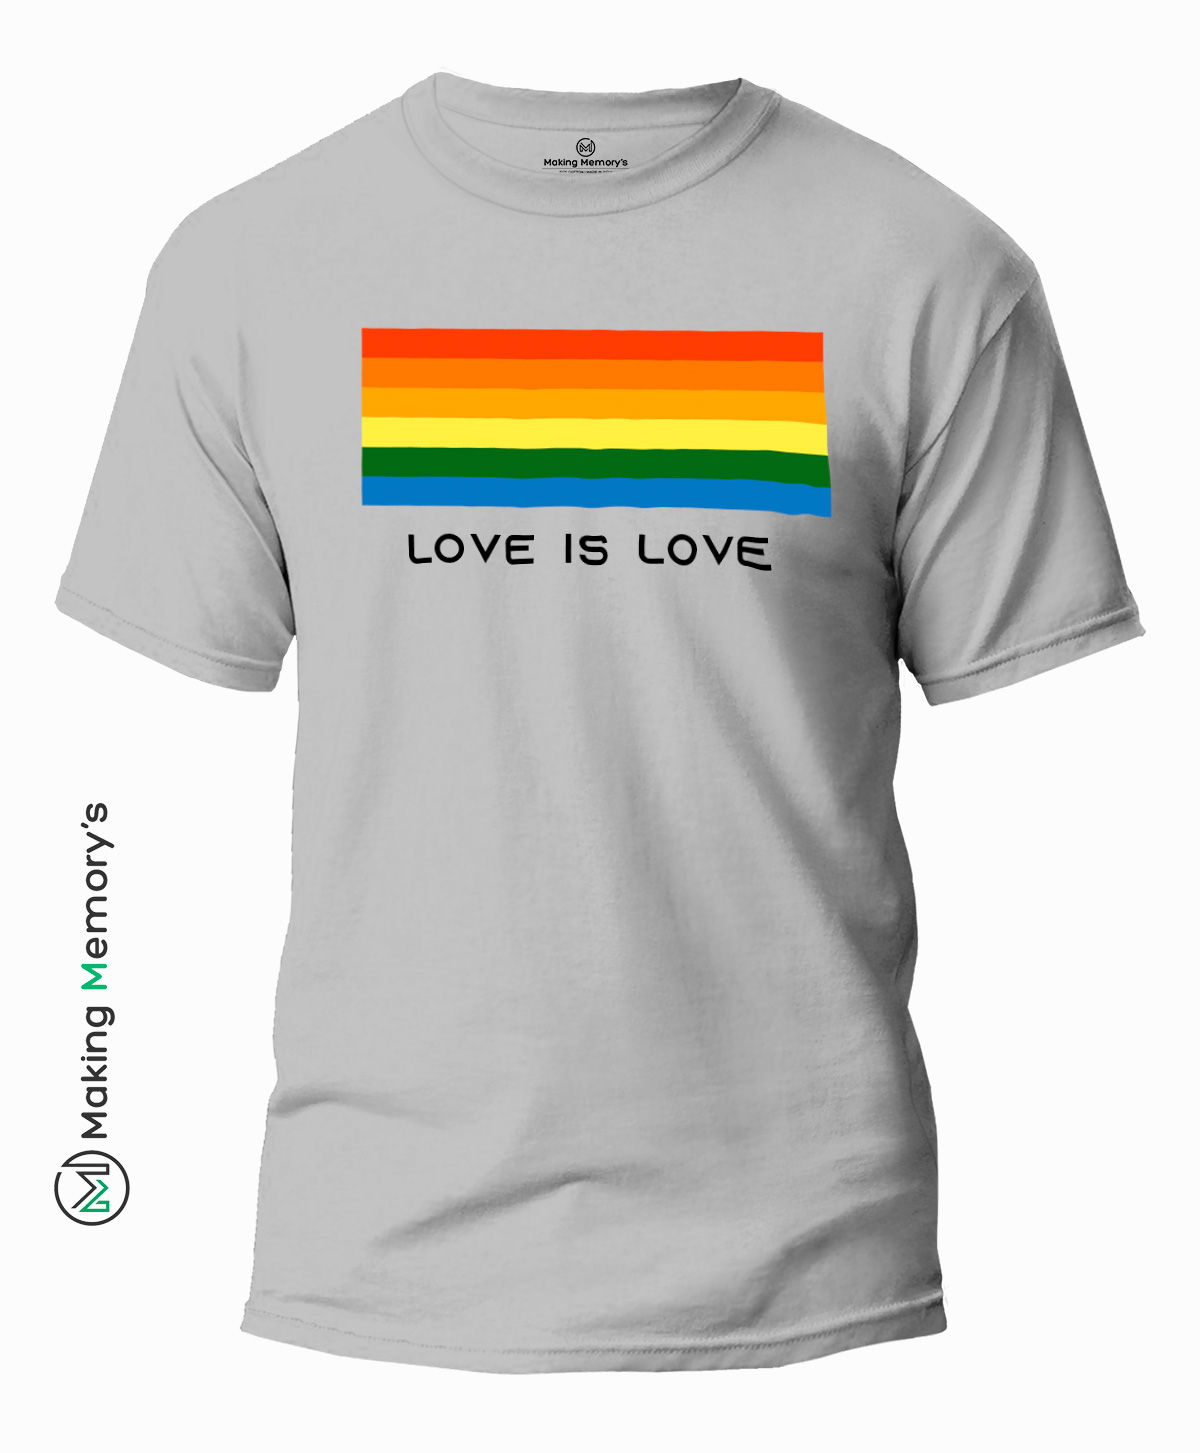 Love-Is-Love-Gray-T-Shirt